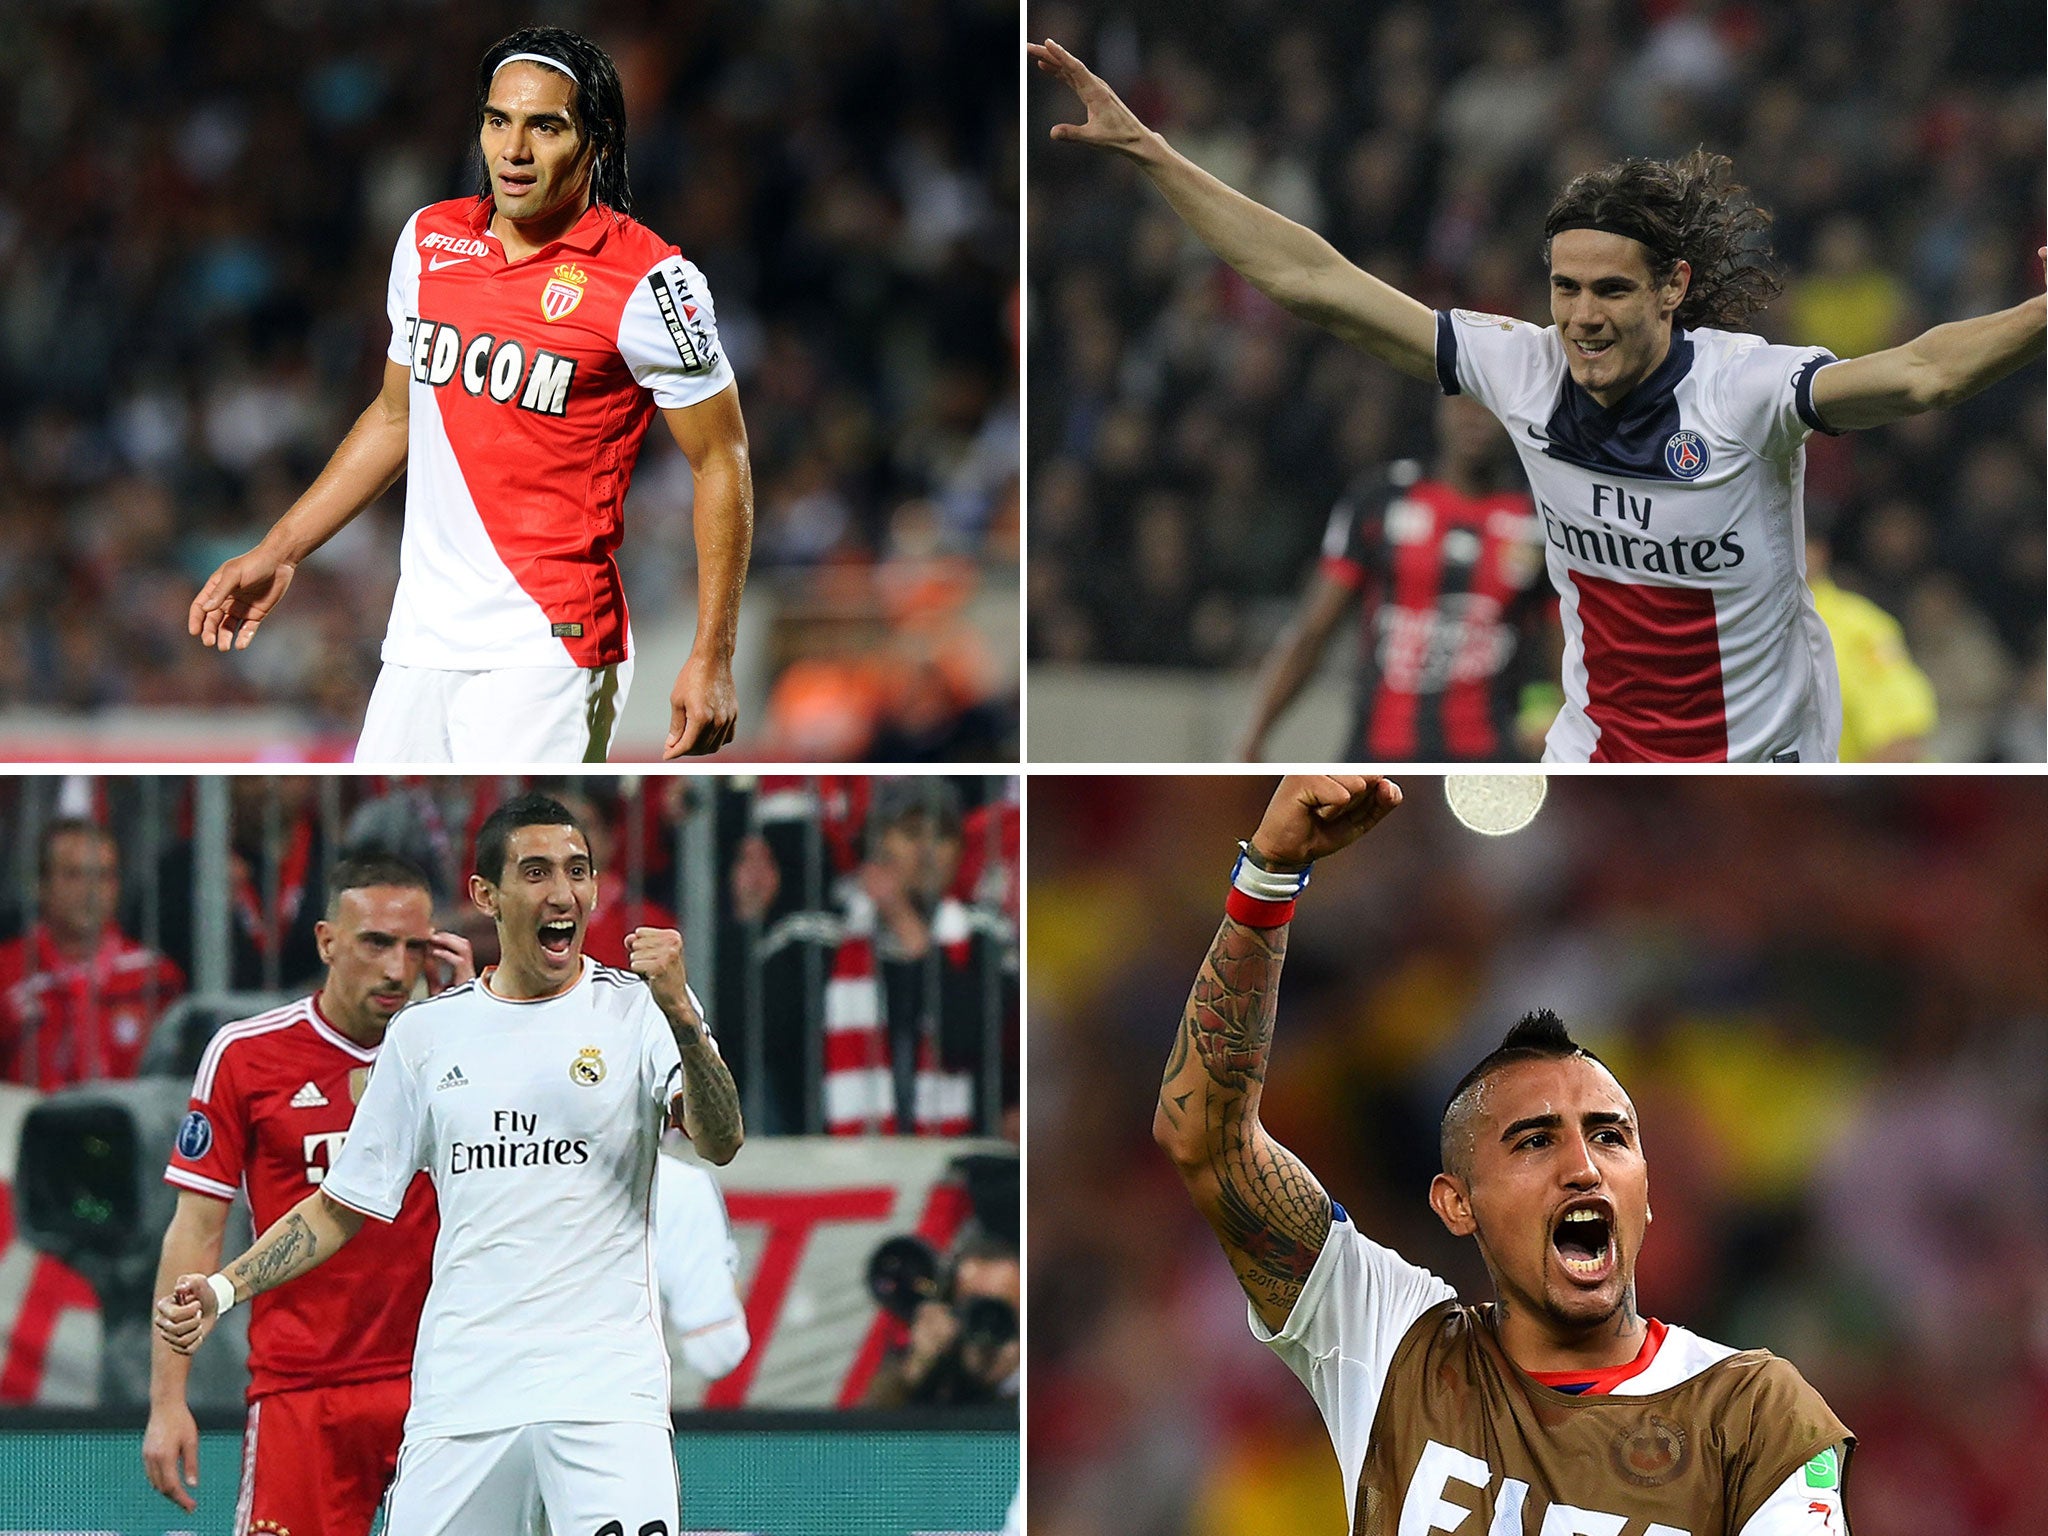 The 10 biggest transfers that could still happen: Falcao, Di Maria, Cavani, Reus, Cech and Vidal could all arrive in the Premier League